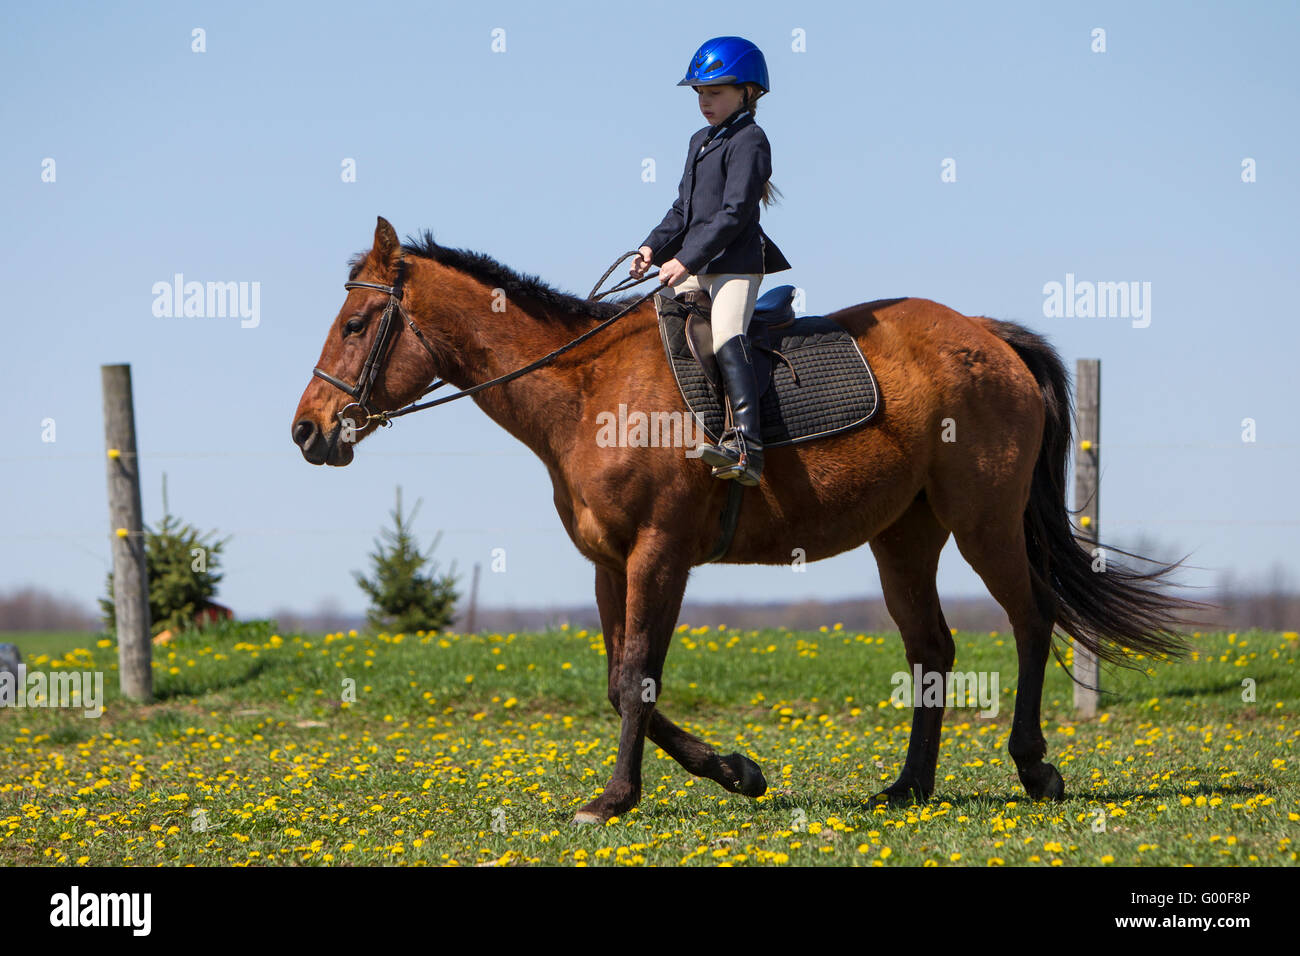 A young girl equestrian riding a horse. Stock Photo